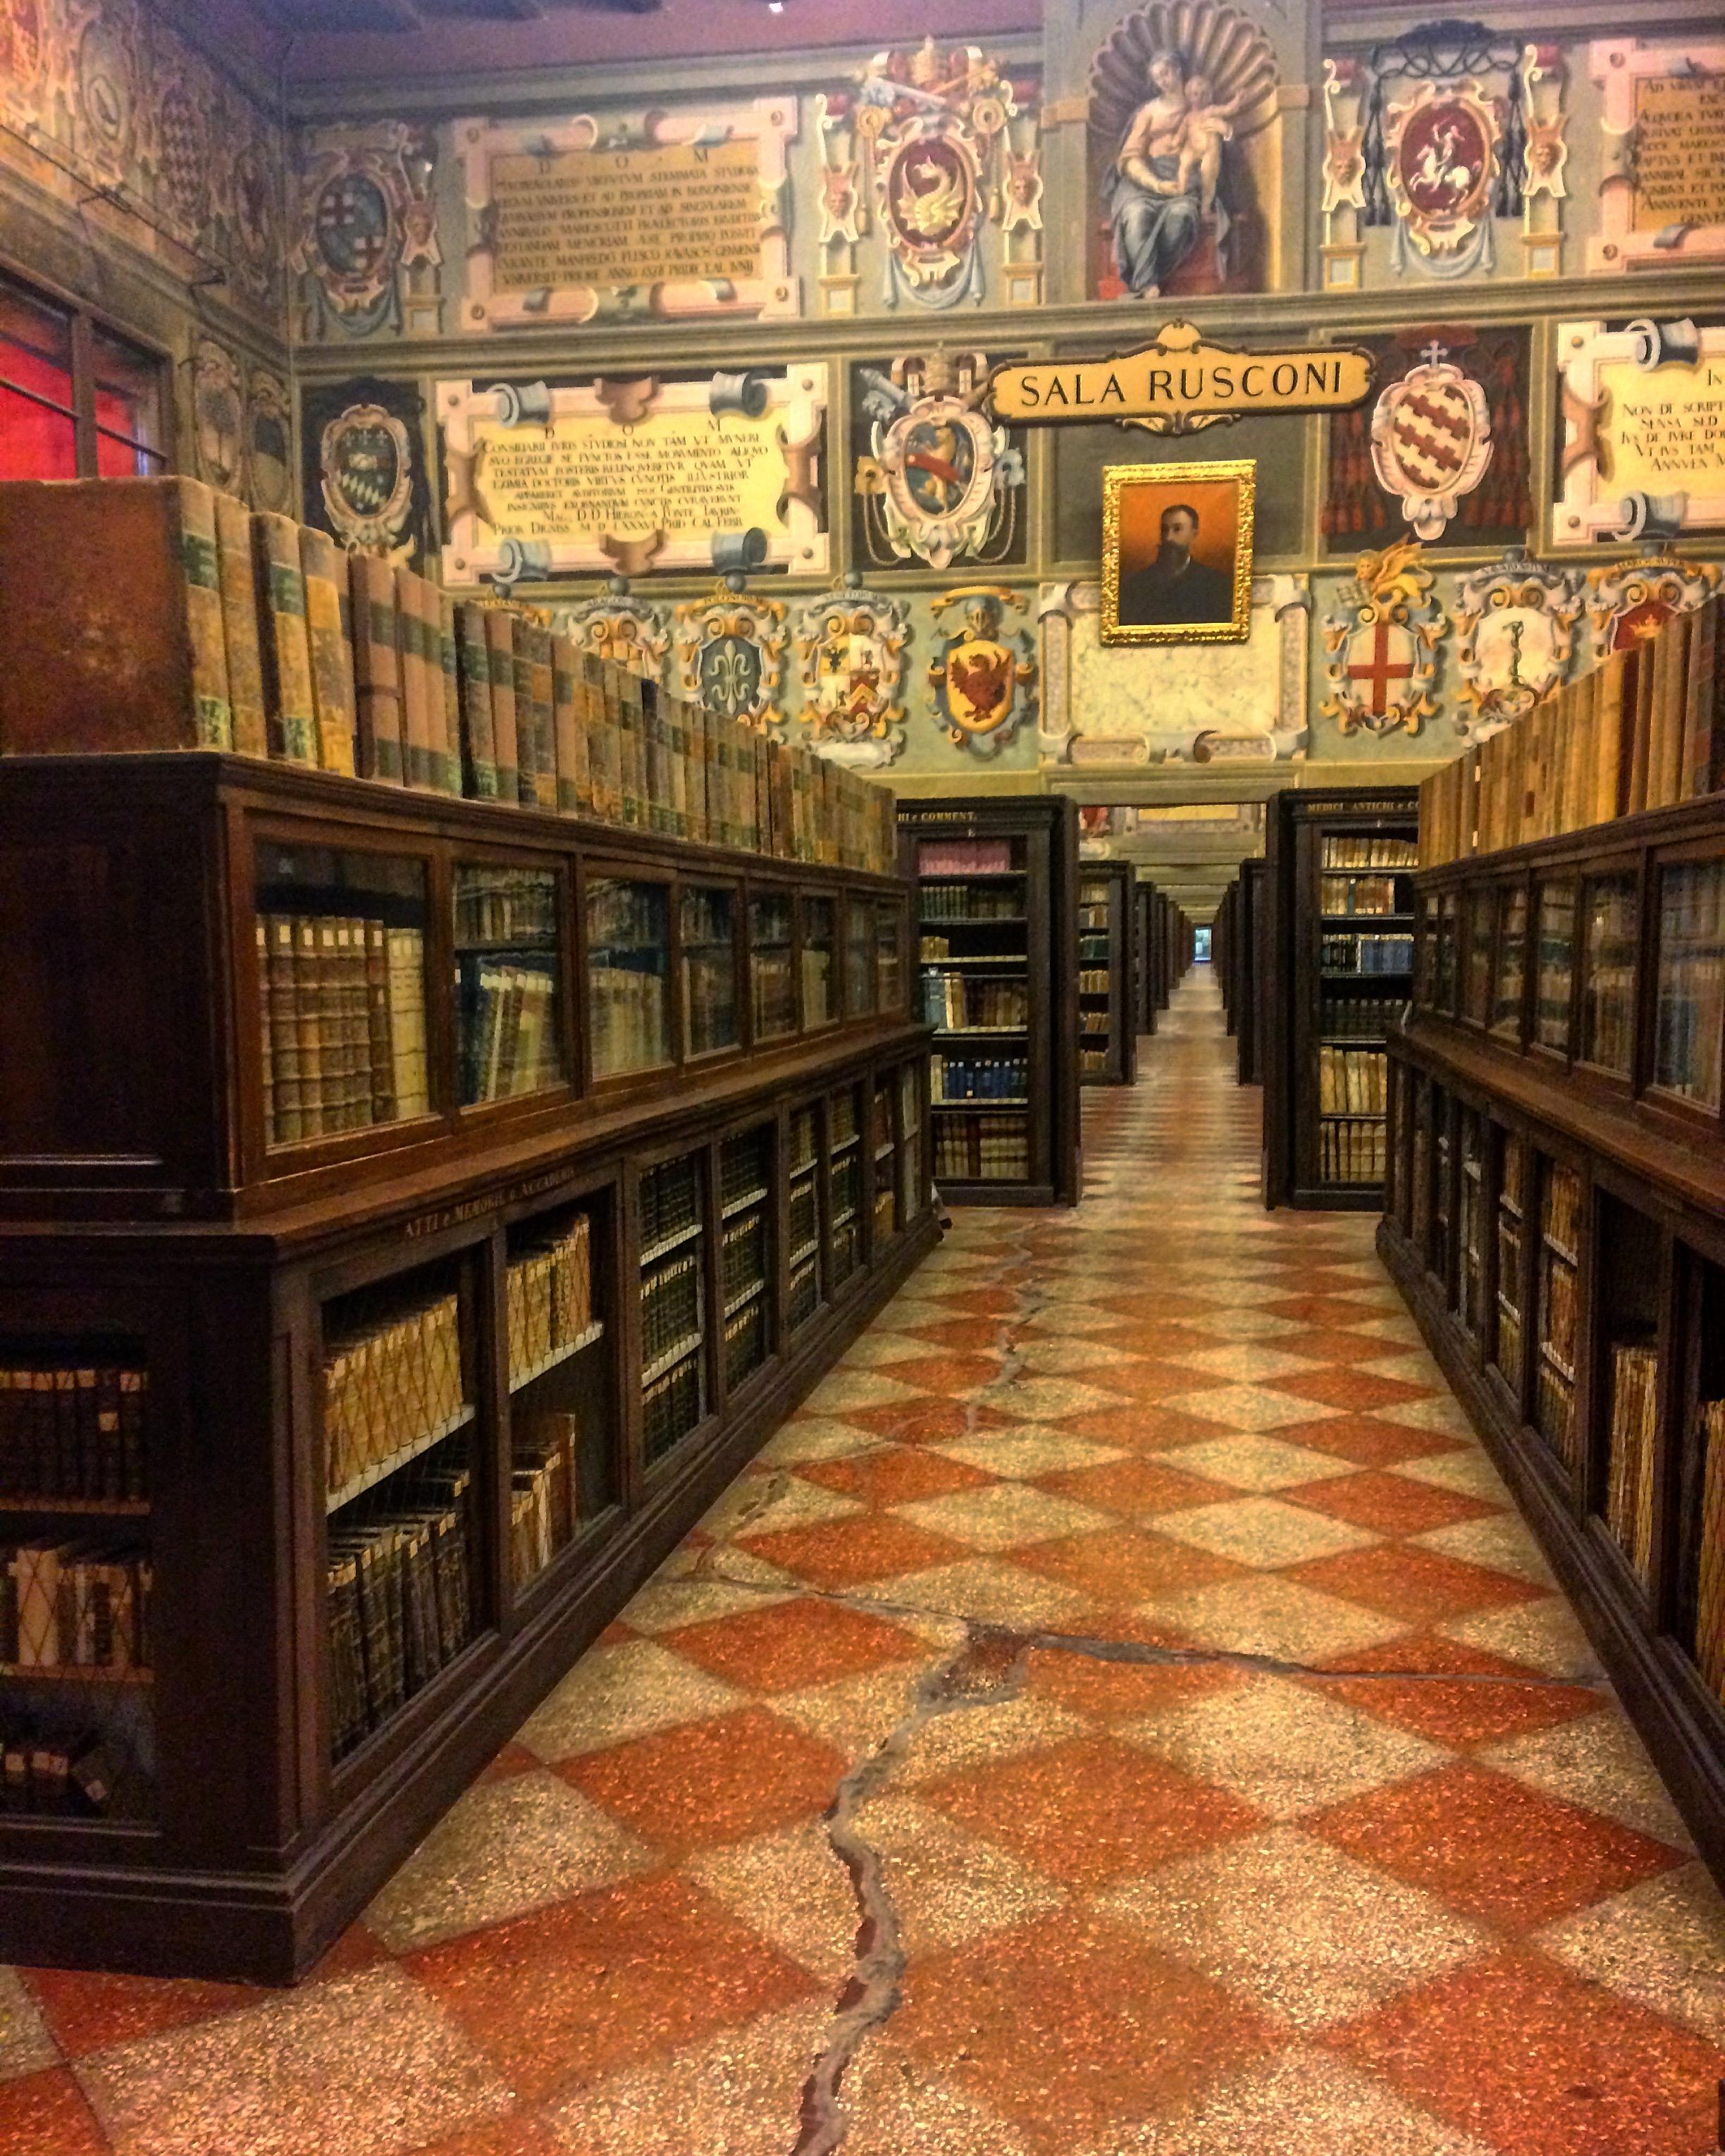 Cover image of this place Biblioteca Comunale dell'Archiginnasio